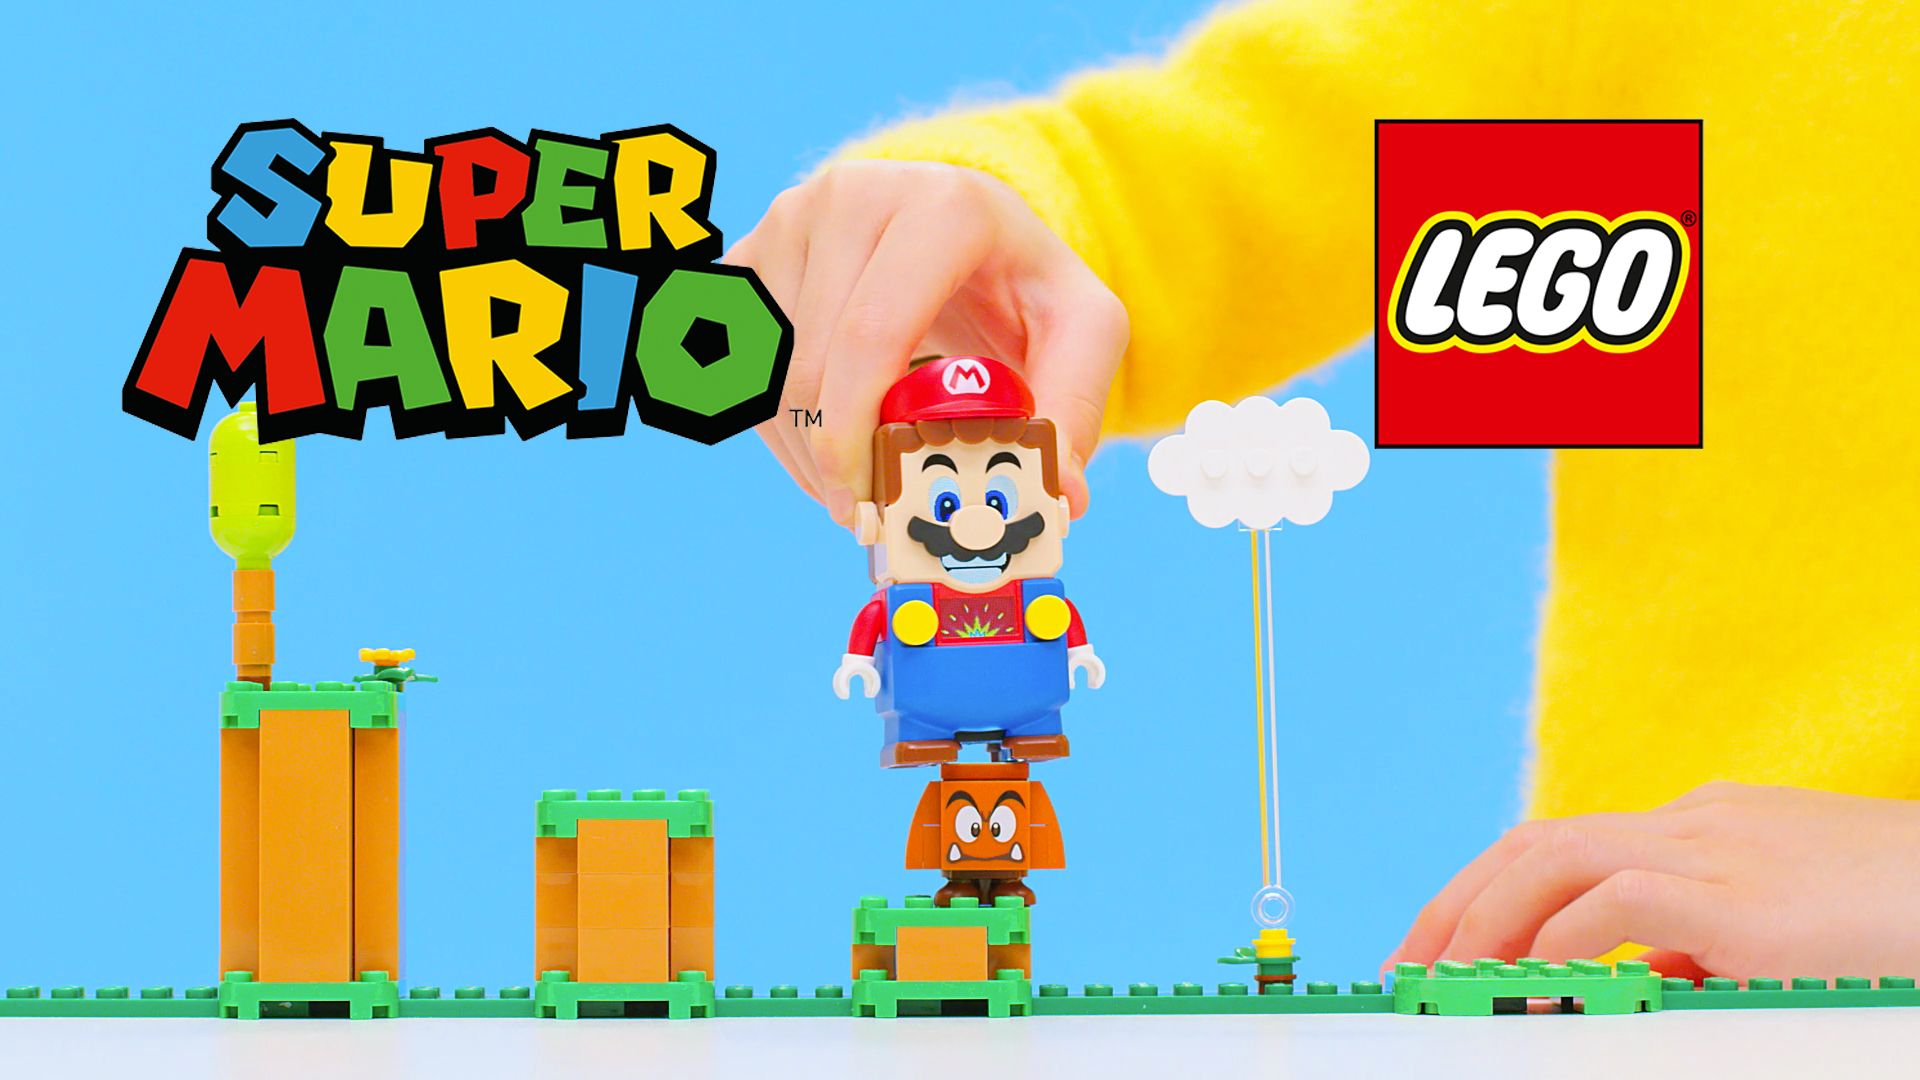 Lego Mario is more than just building bricks